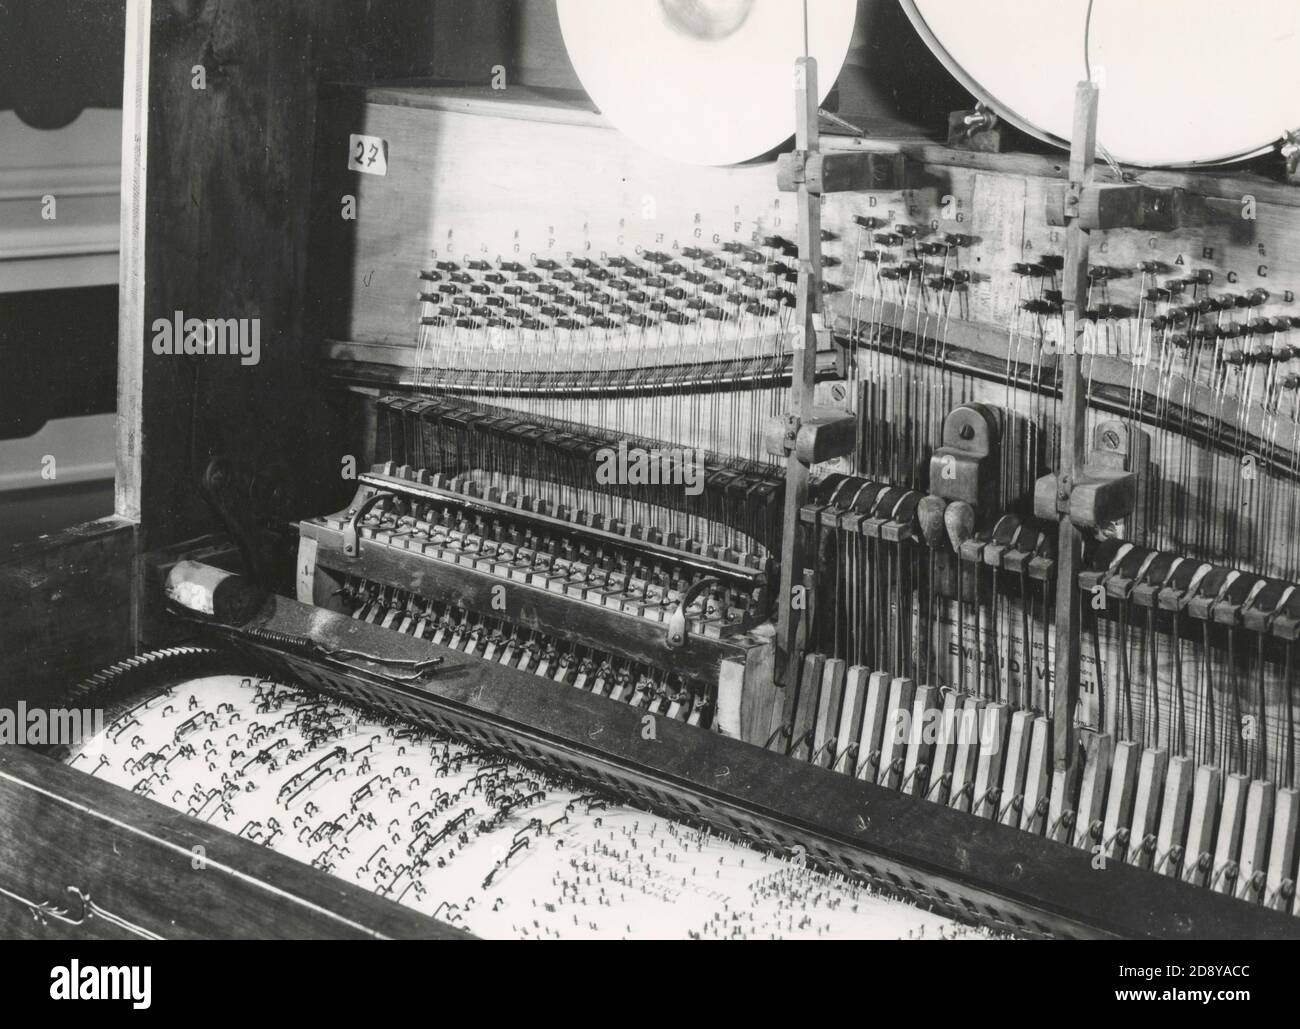 Antique player piano mechanism Stock Photo